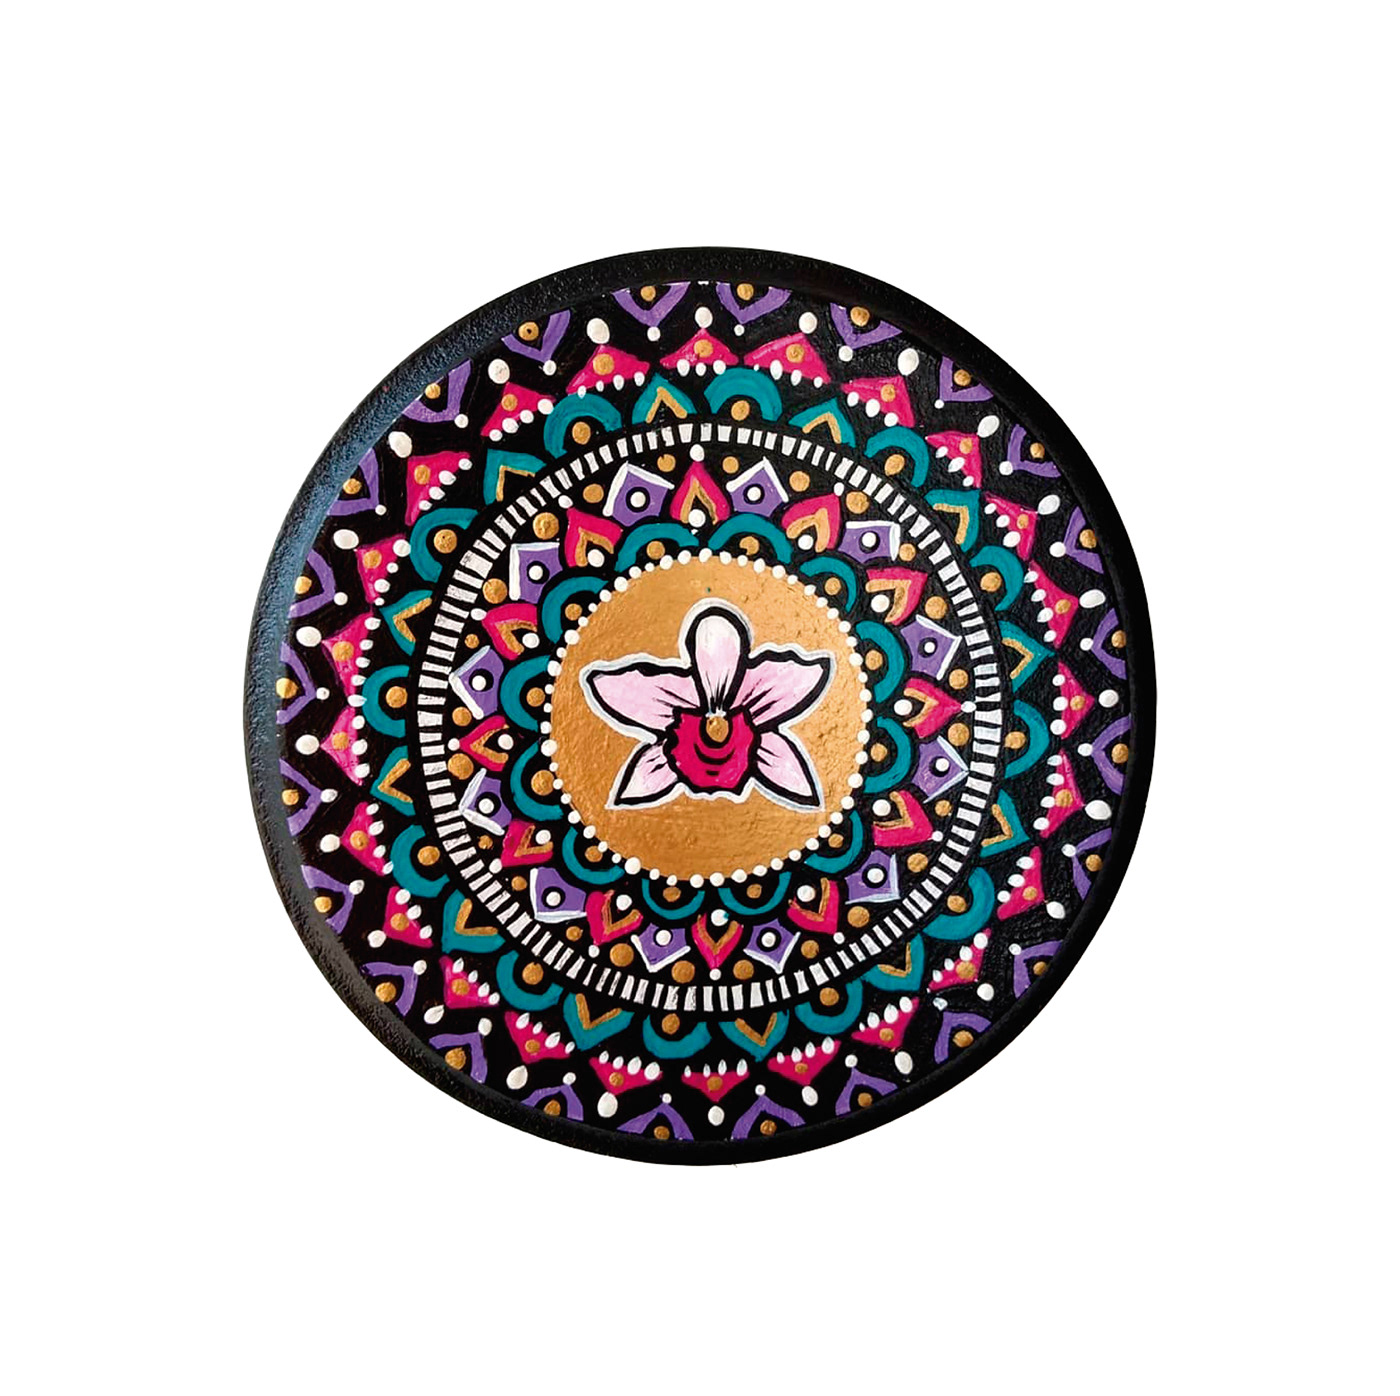 Mandala zendala interior design  meditation handmade decoration decor Mandalas design painting  